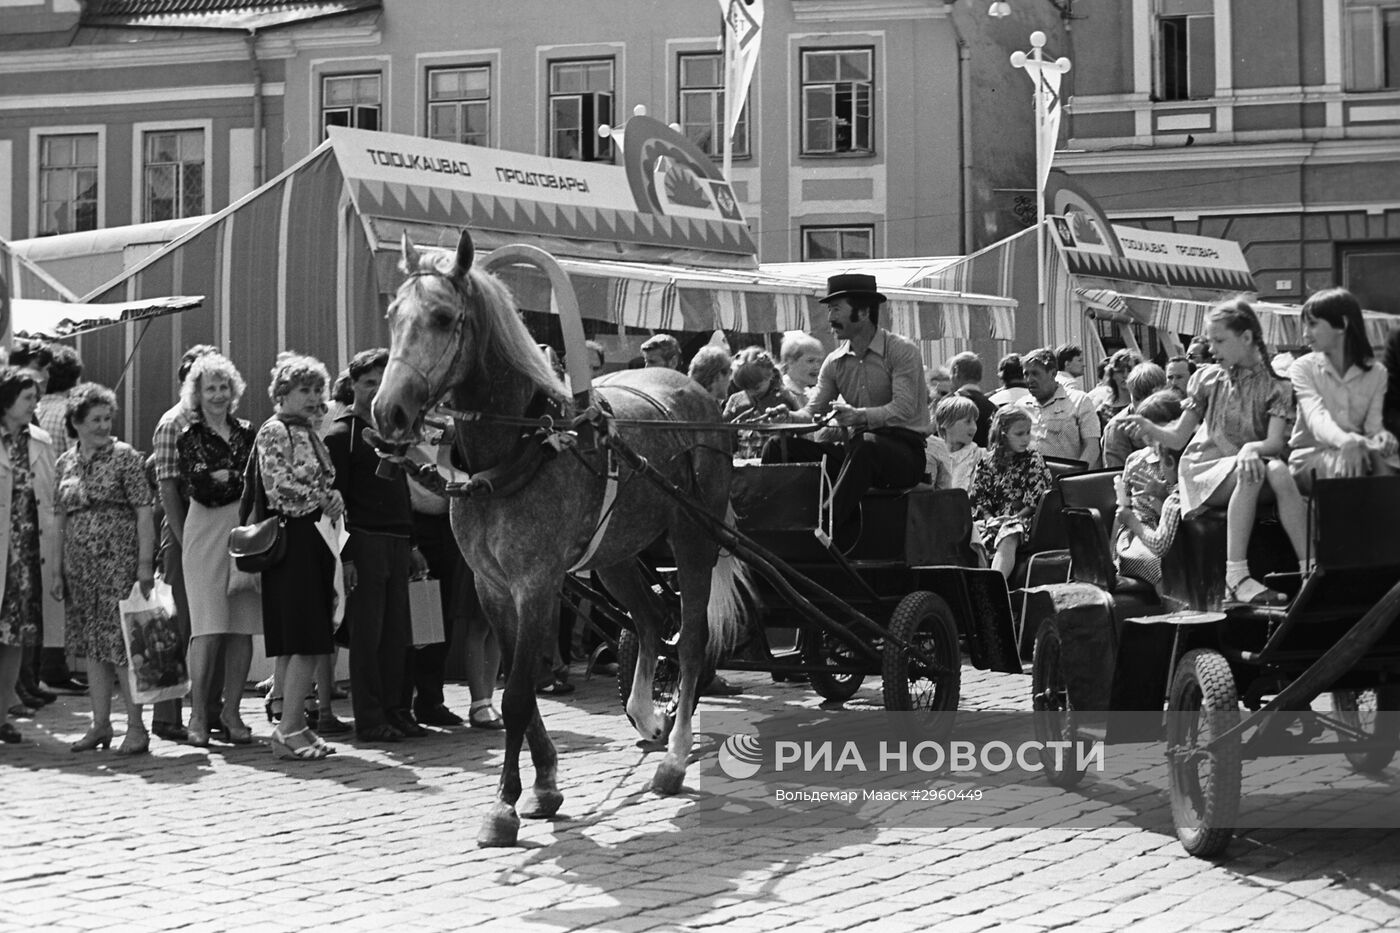 Сегодня праздник старый. Фотокорреспондент посетил Таллин ЭССР.